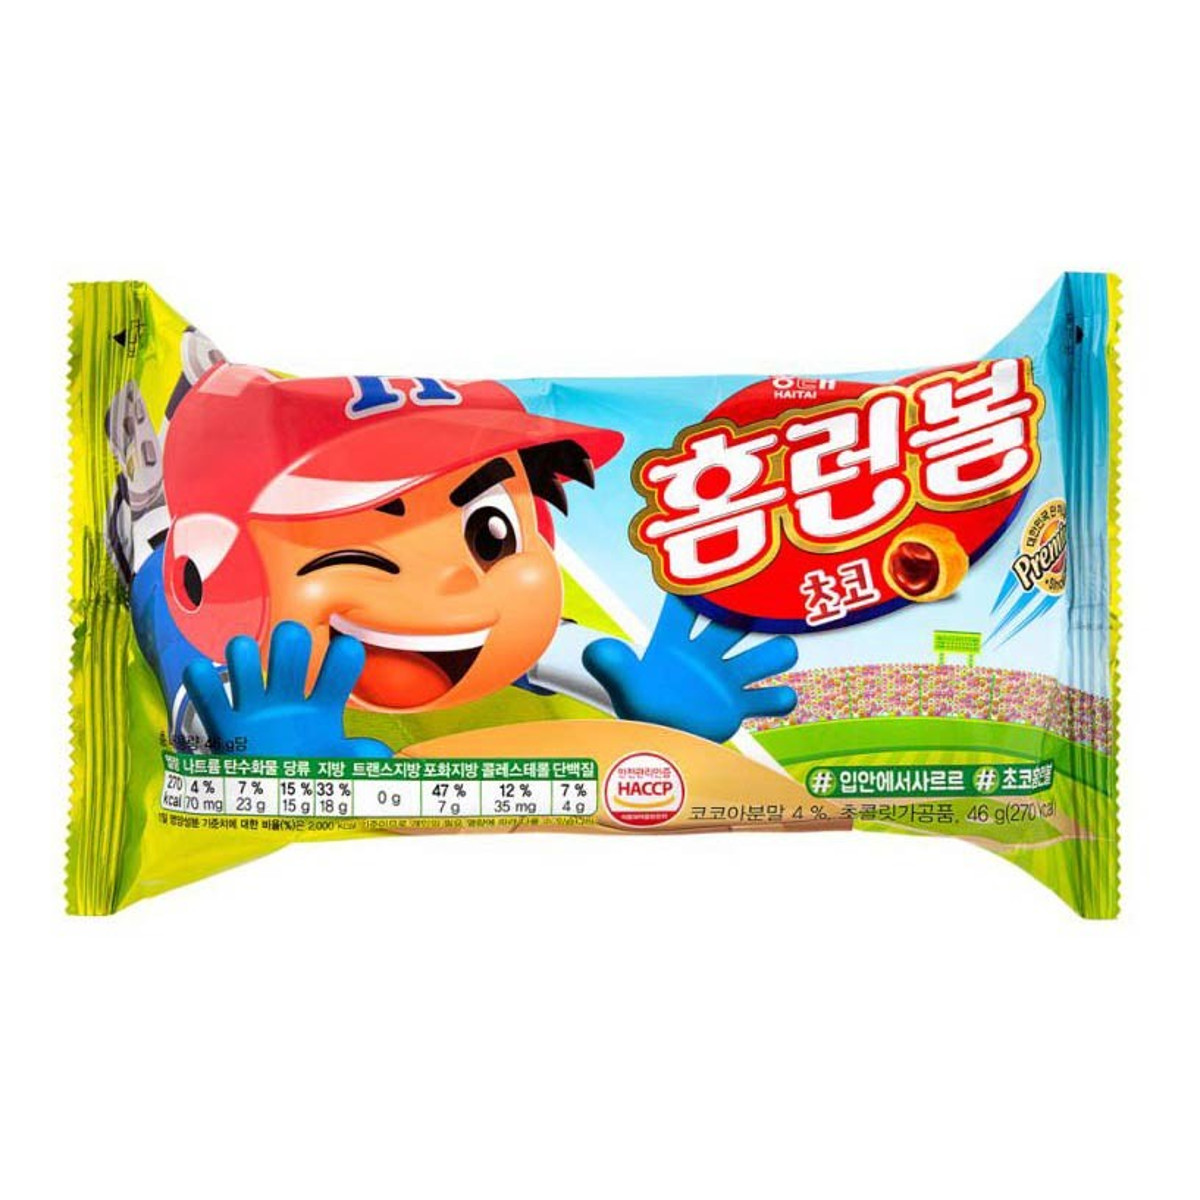 Biscoito Coreano com Recheio de Chocolate Homerun Ball Haitai  - 46 gramas